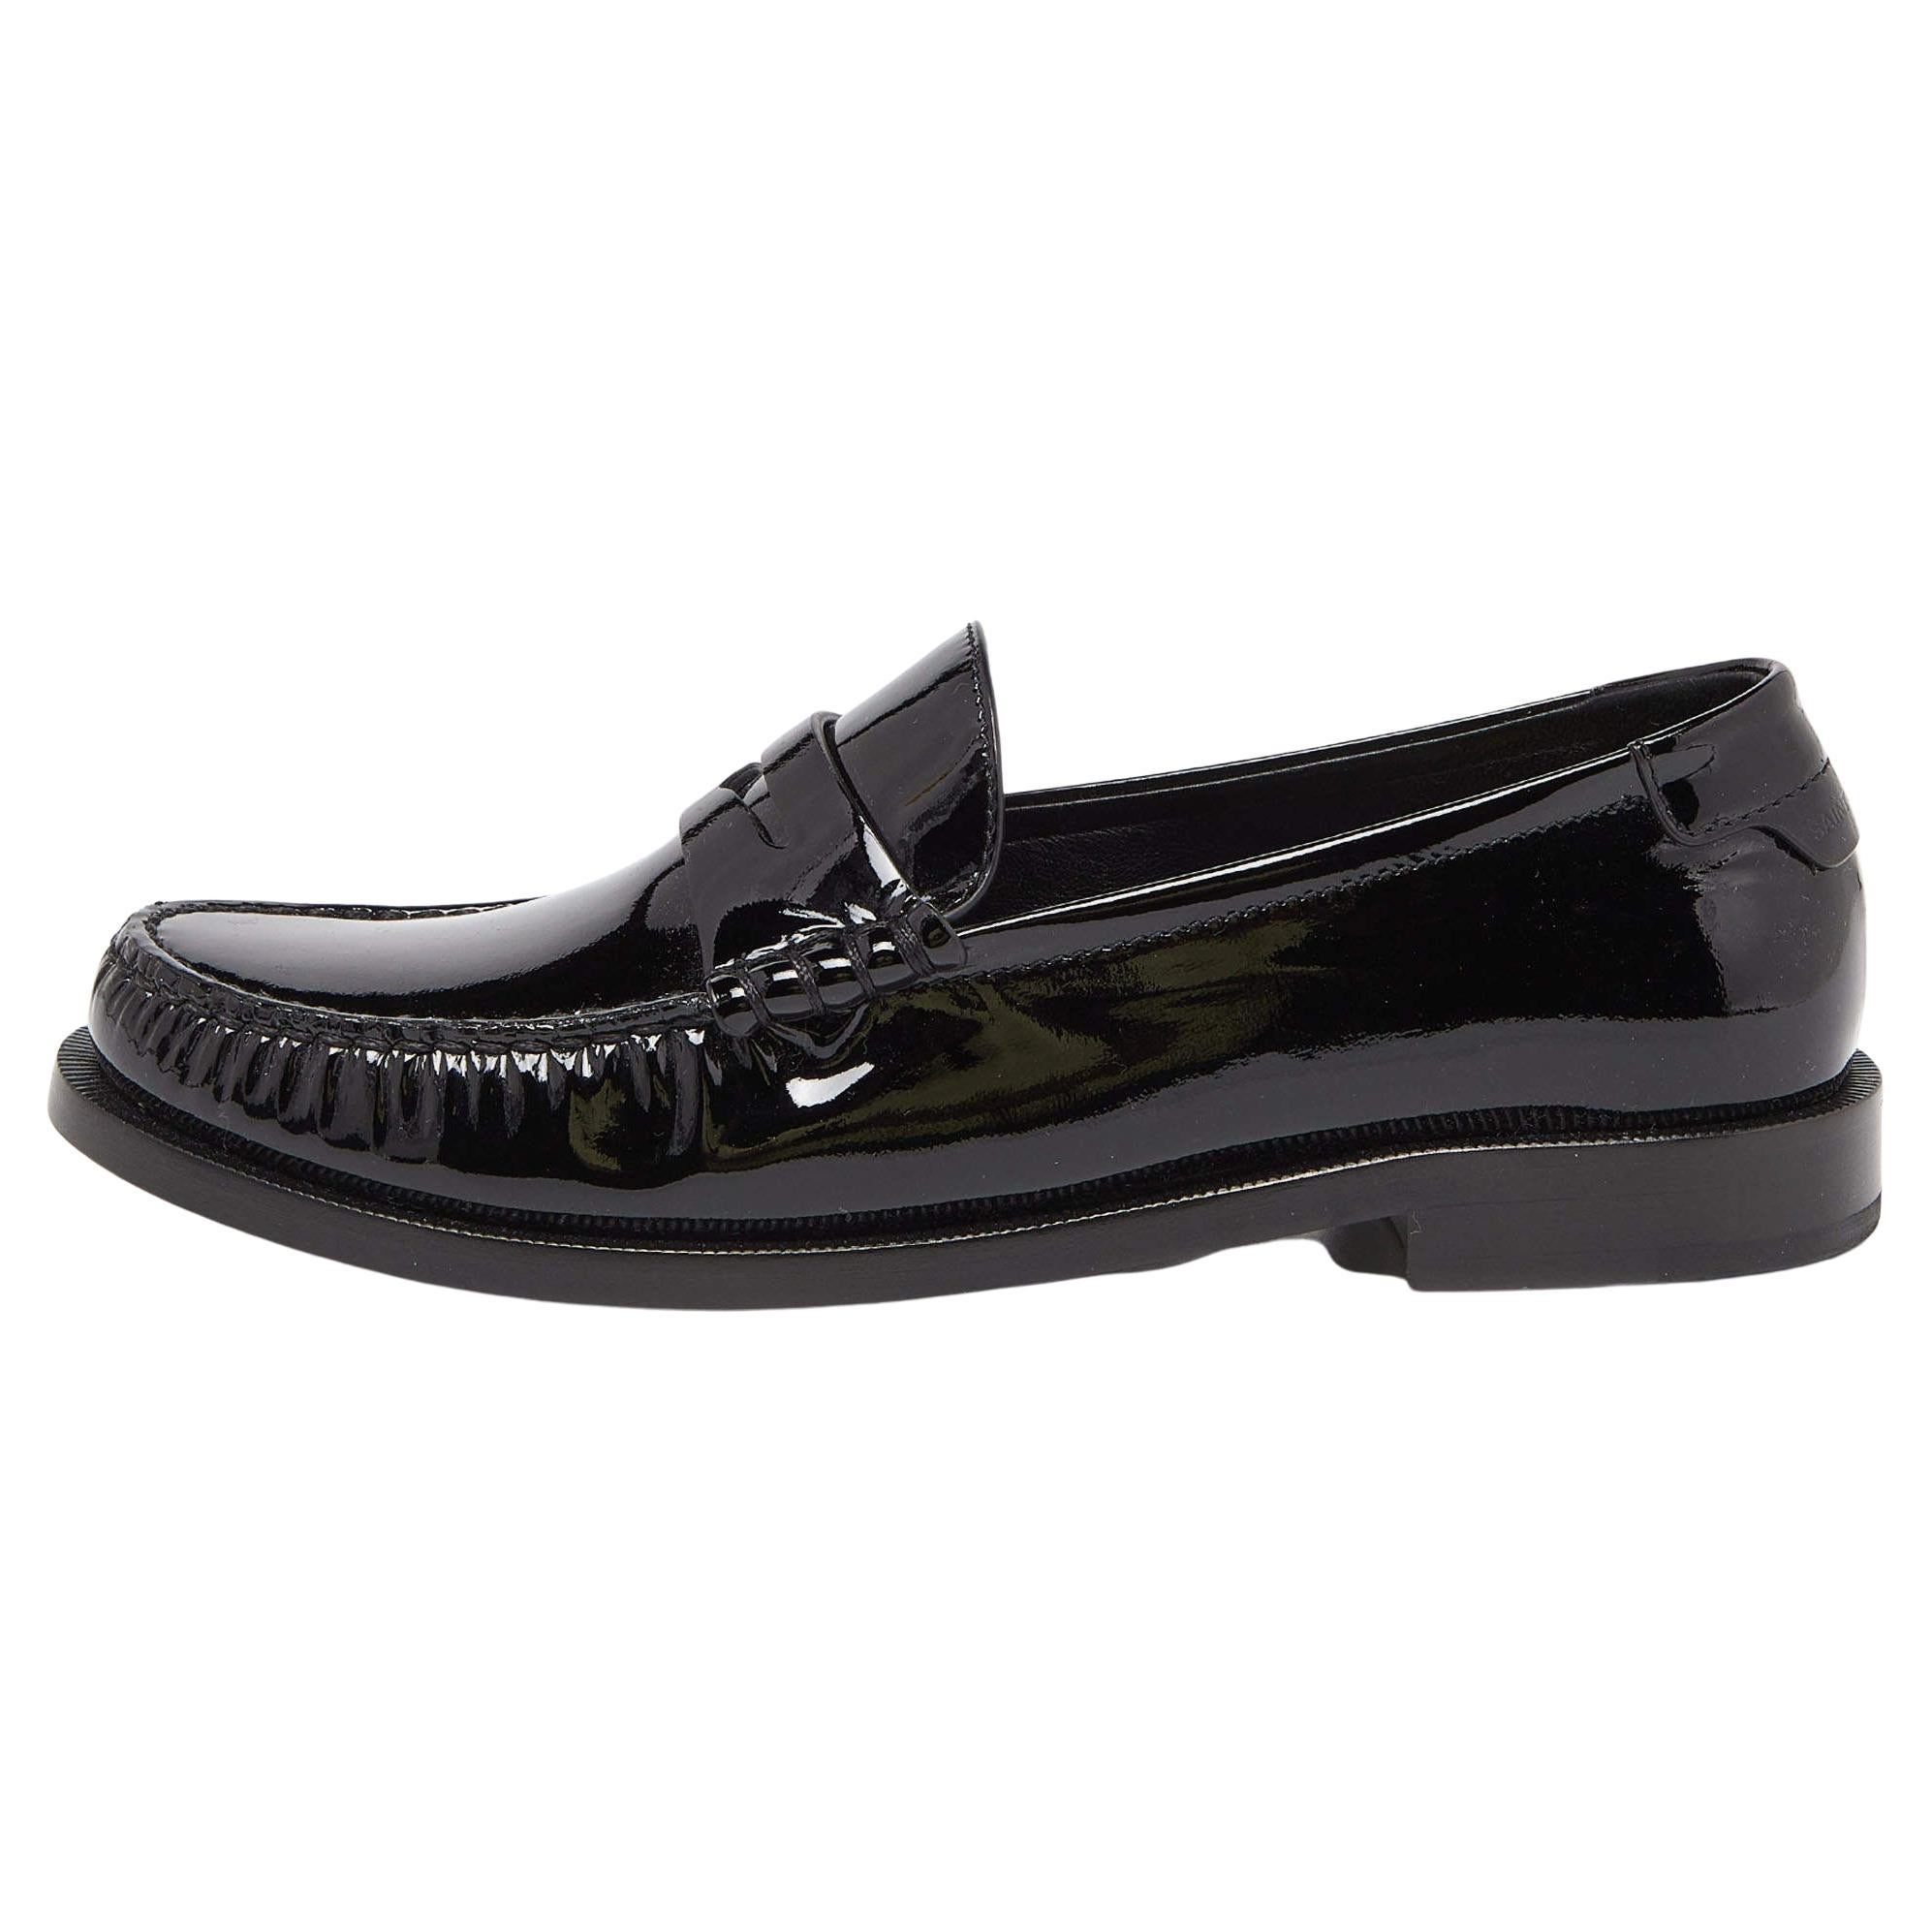 Saint Laurent Black Patent Leather Penny Le Loafers Size 37.5 For Sale